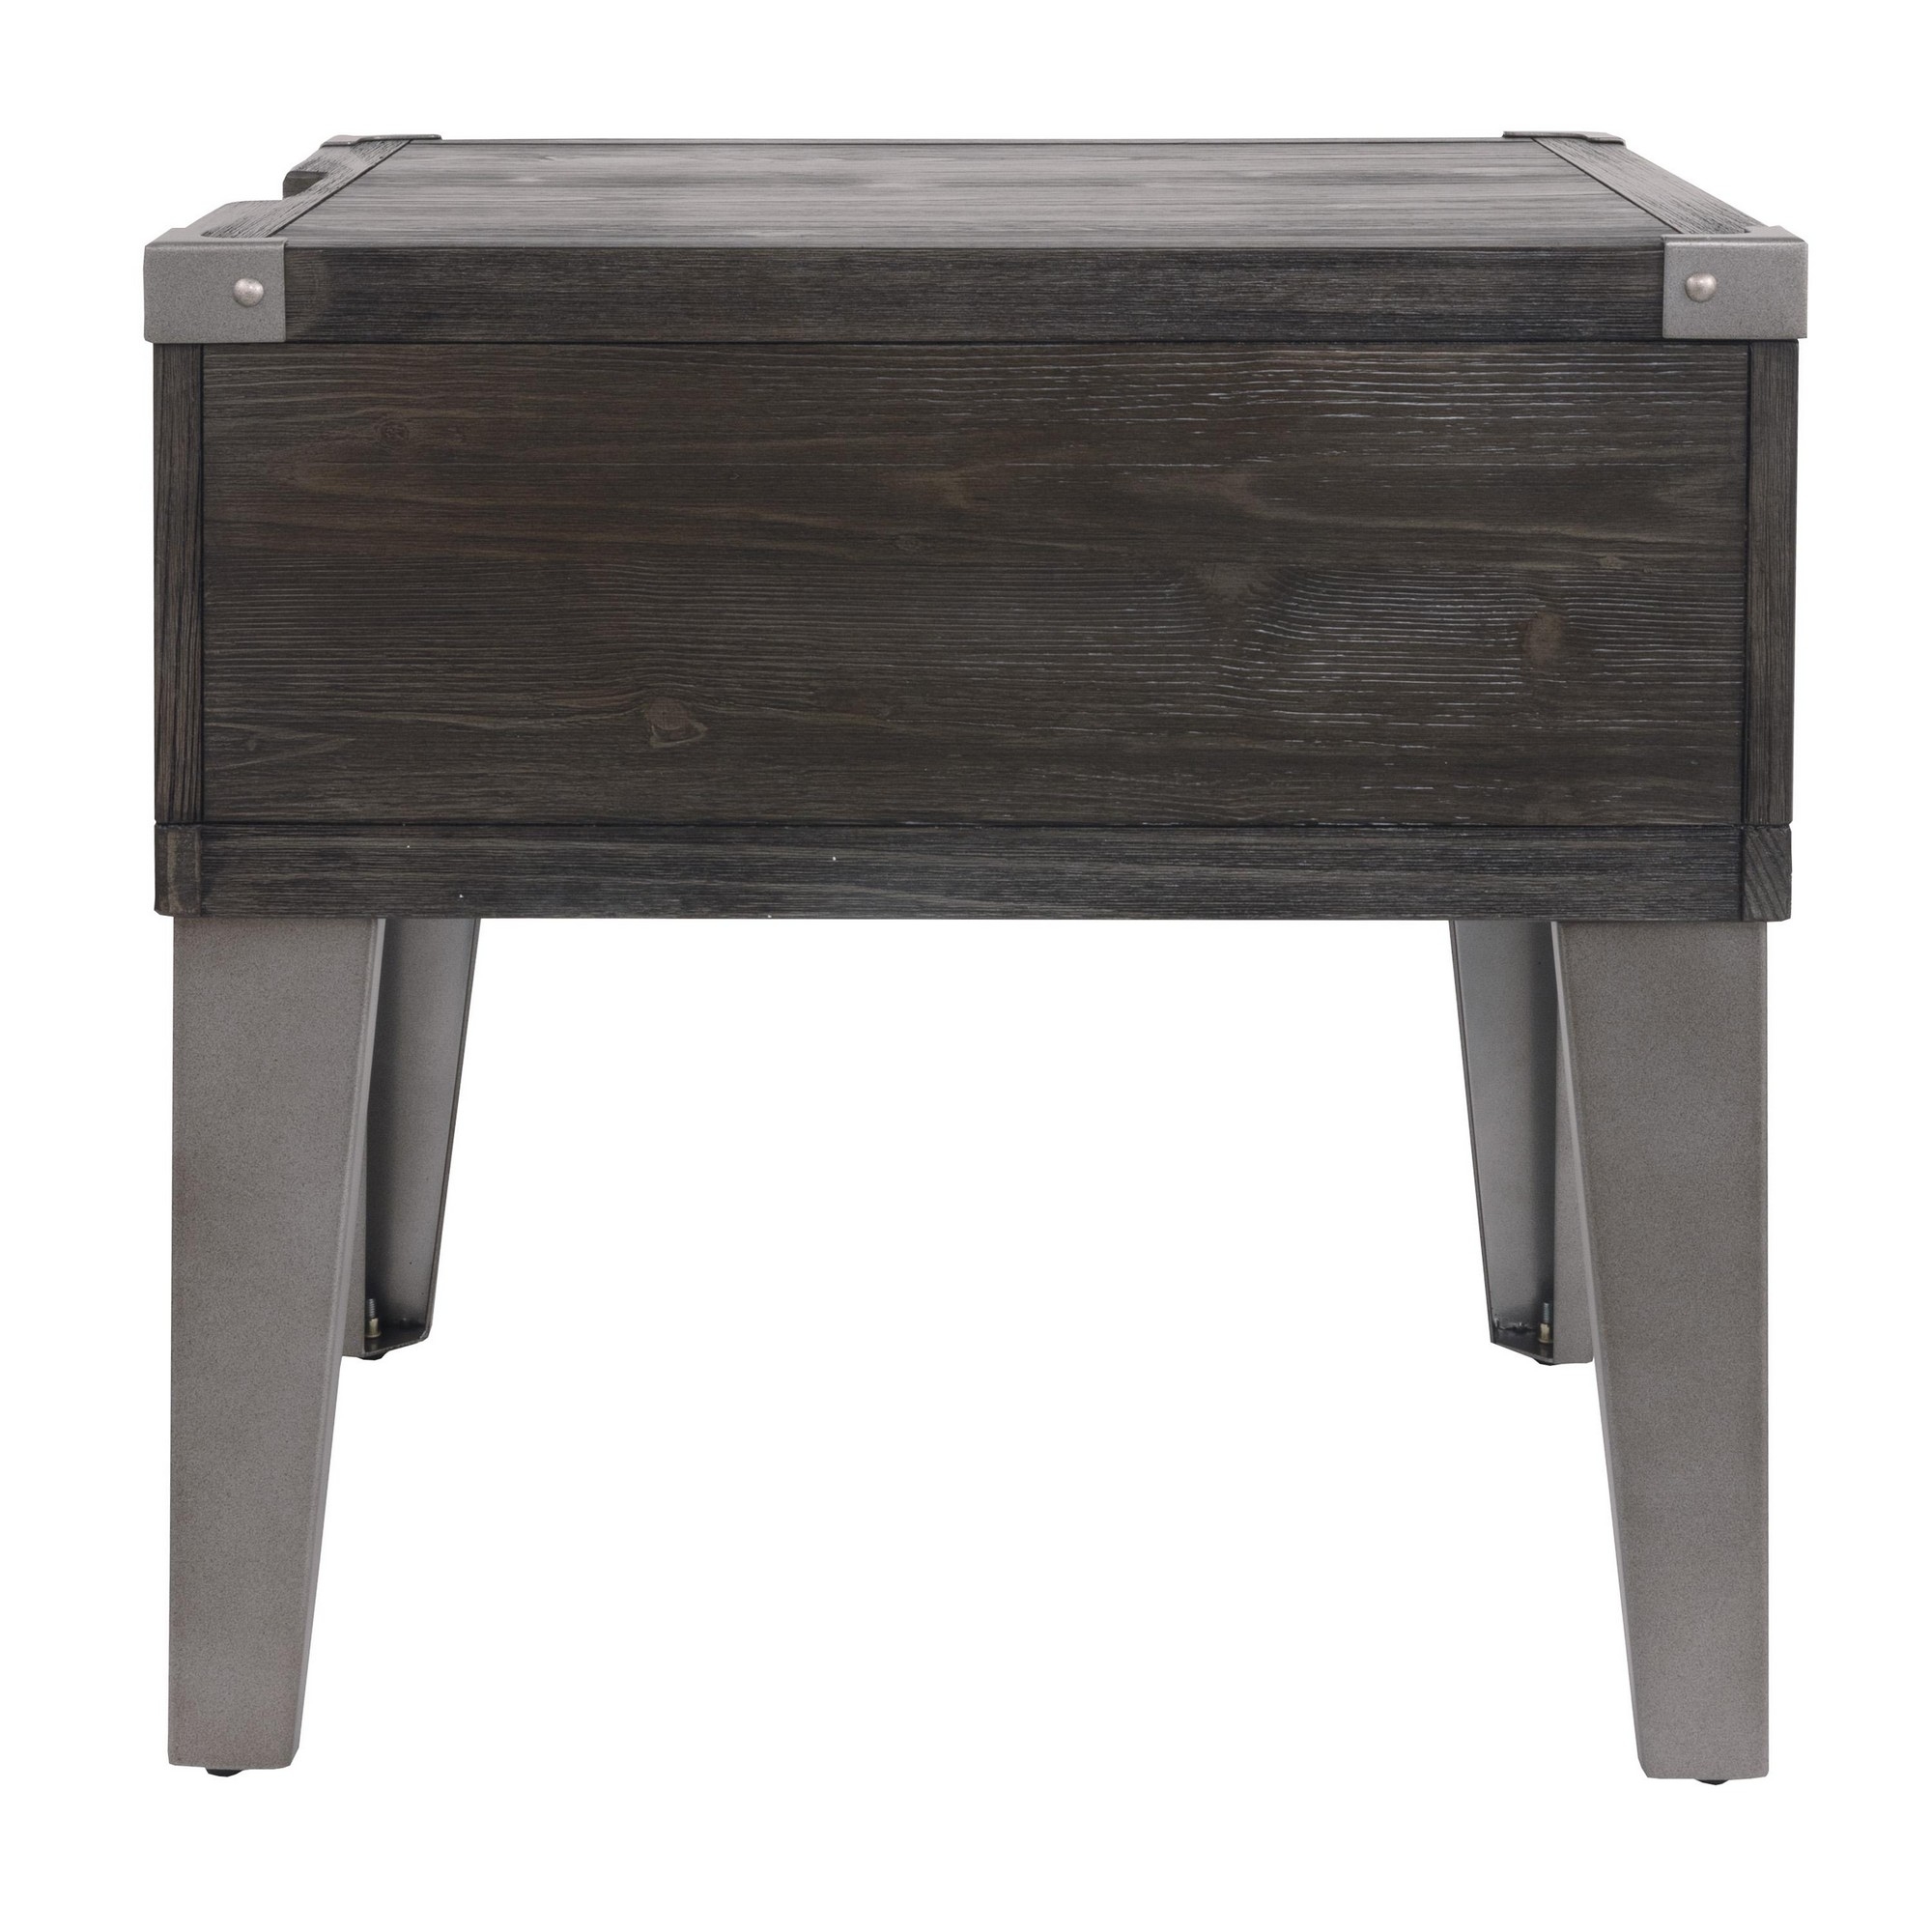 Rectangular Wooden End Table With 1 Drawer And Corner Metal Brackets, Gray- Saltoro Sherpi